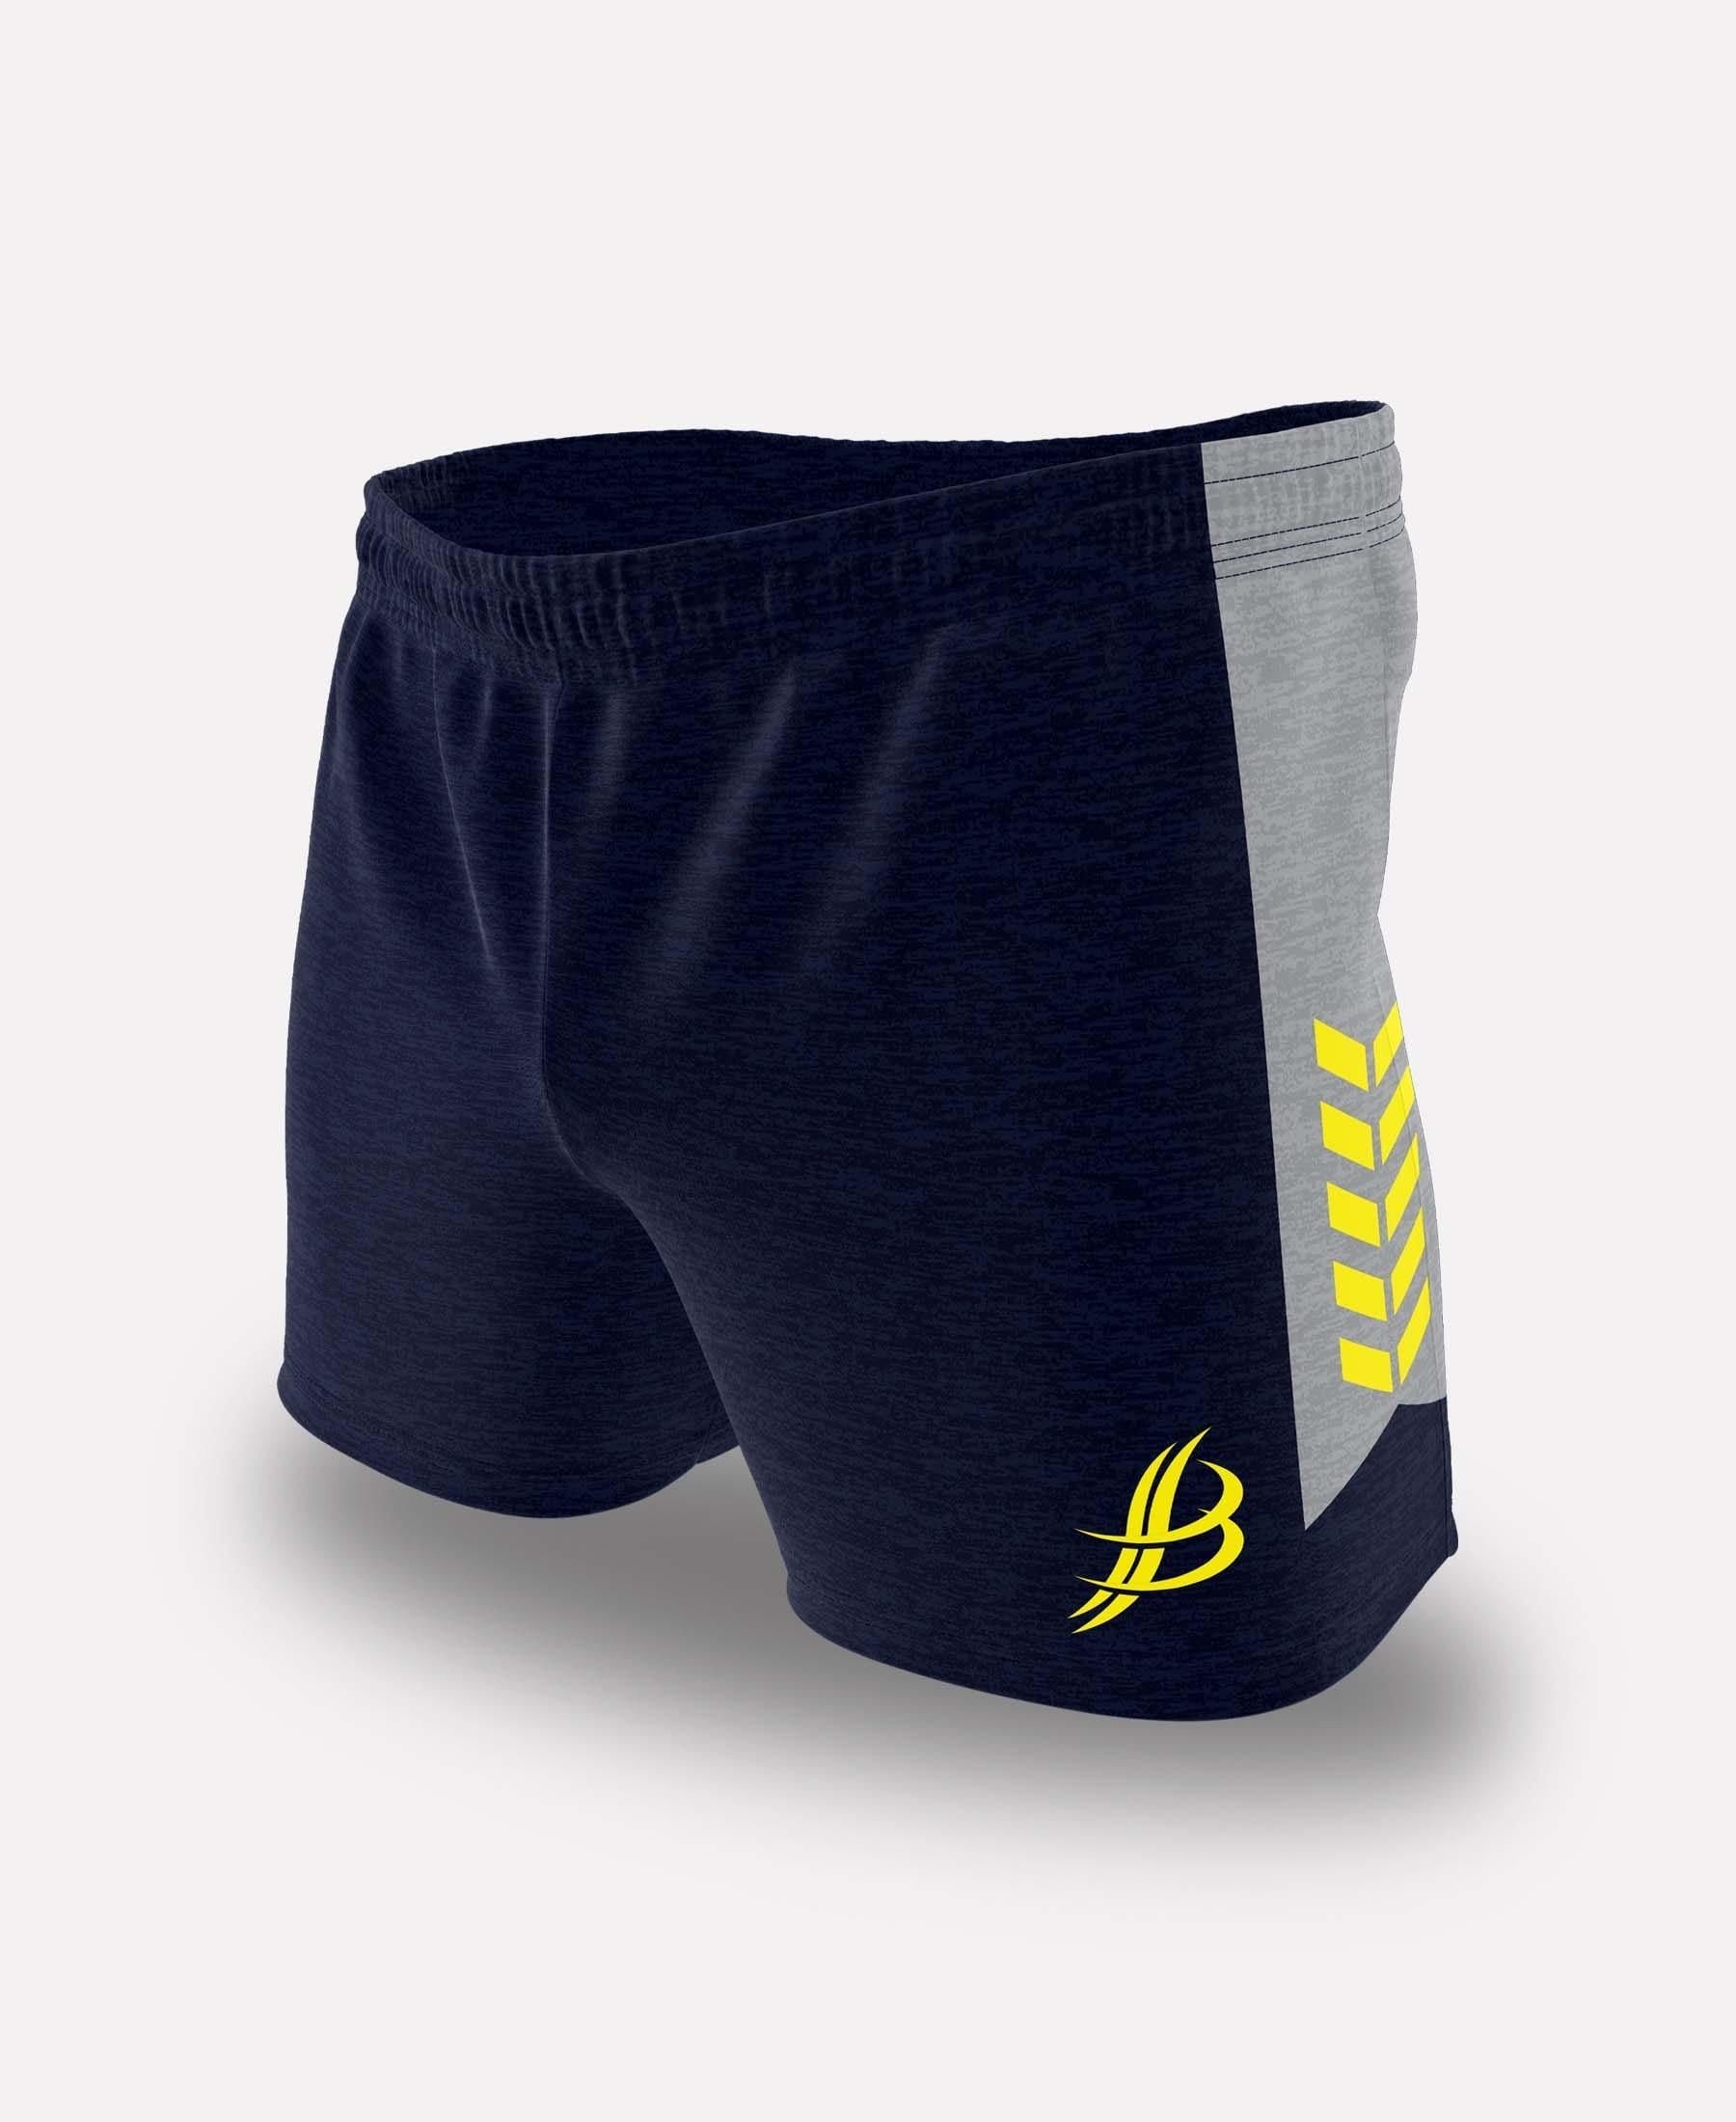 Bua20 Kids Shorts Navy/Grey/Lemon - Bourke Sports Limited